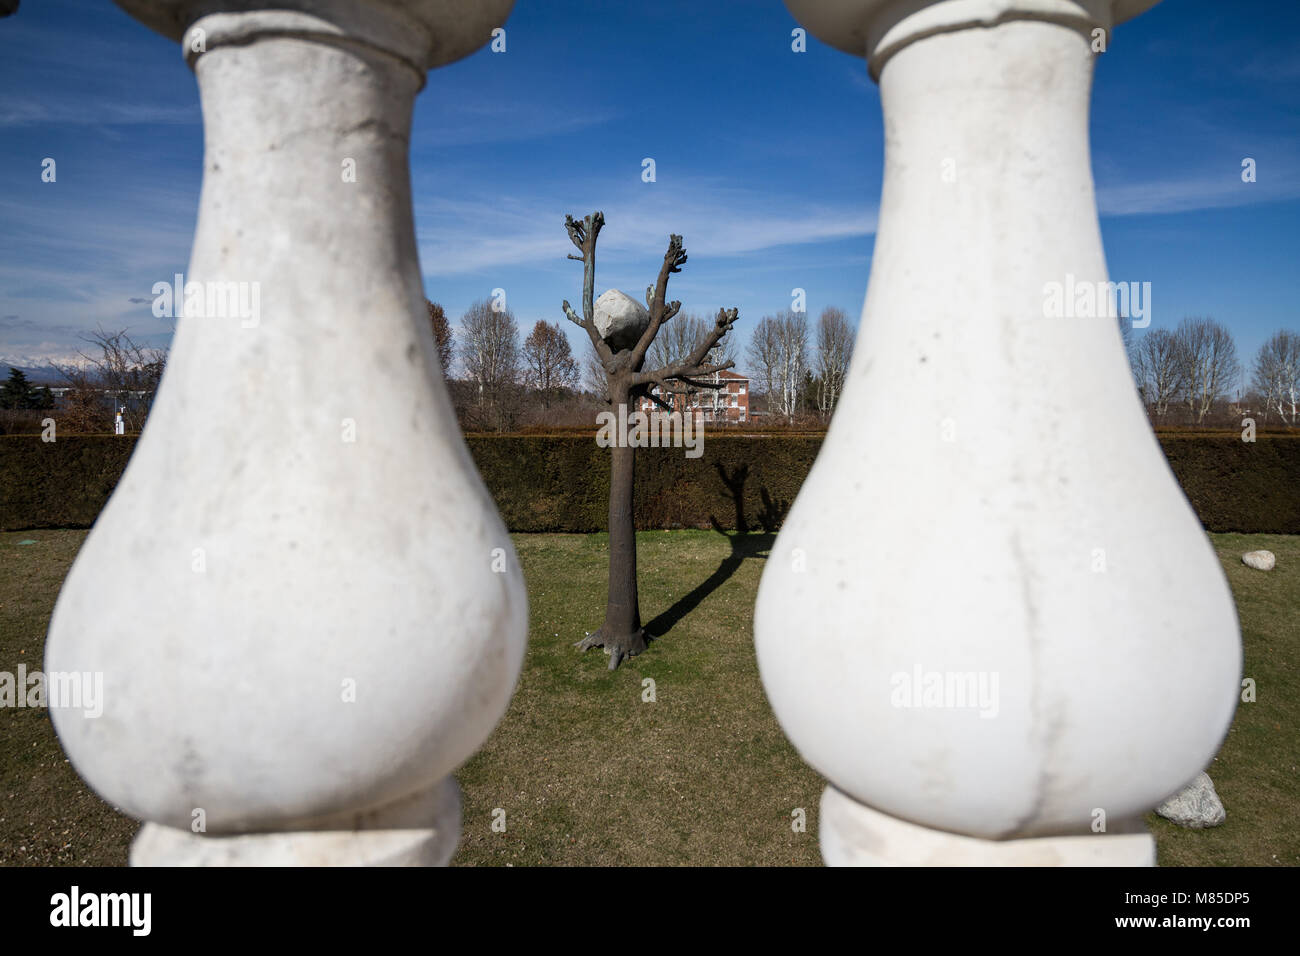 Royal gardens. Reggia di Venaria Reale. Italy Stock Photo